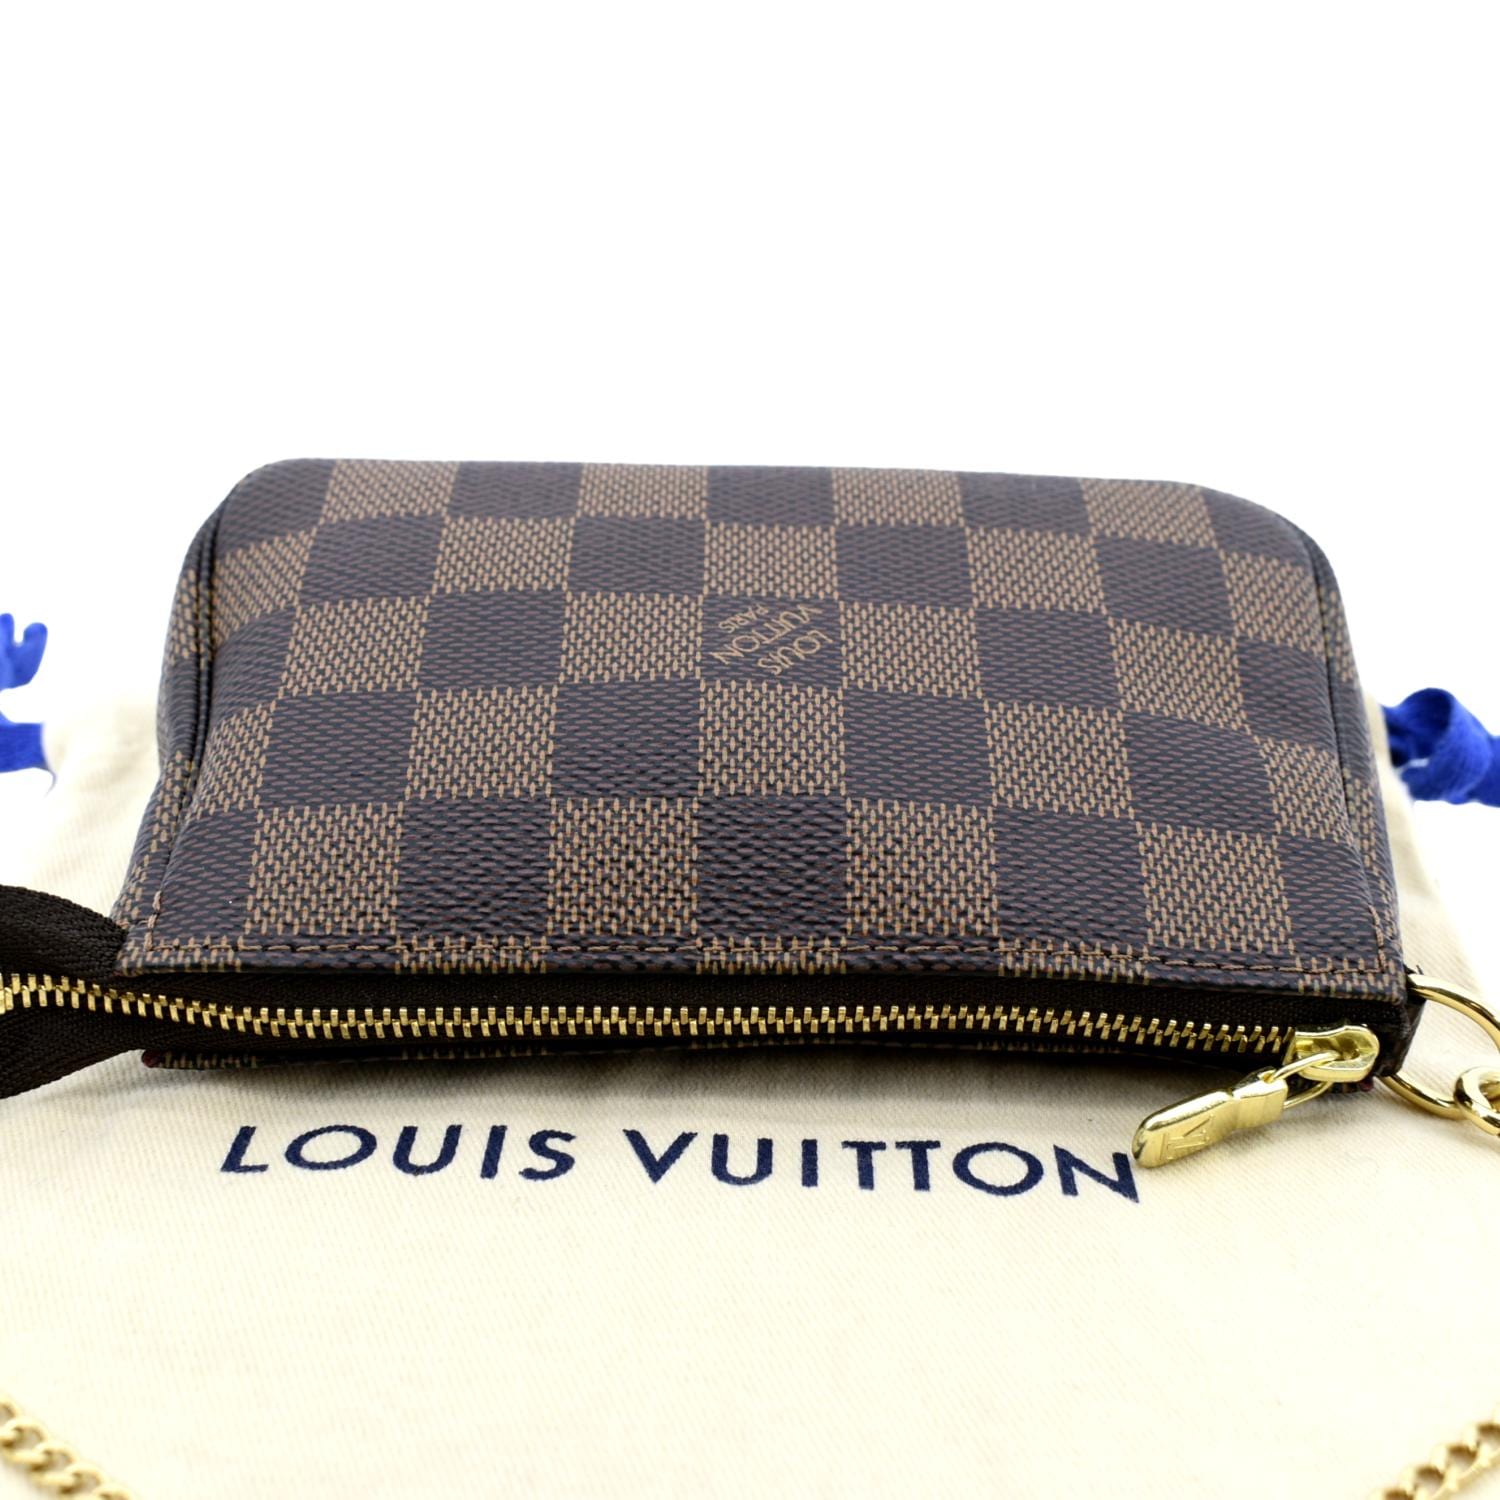 Louis Vuitton Damier Ebene Mini Pochette in Black